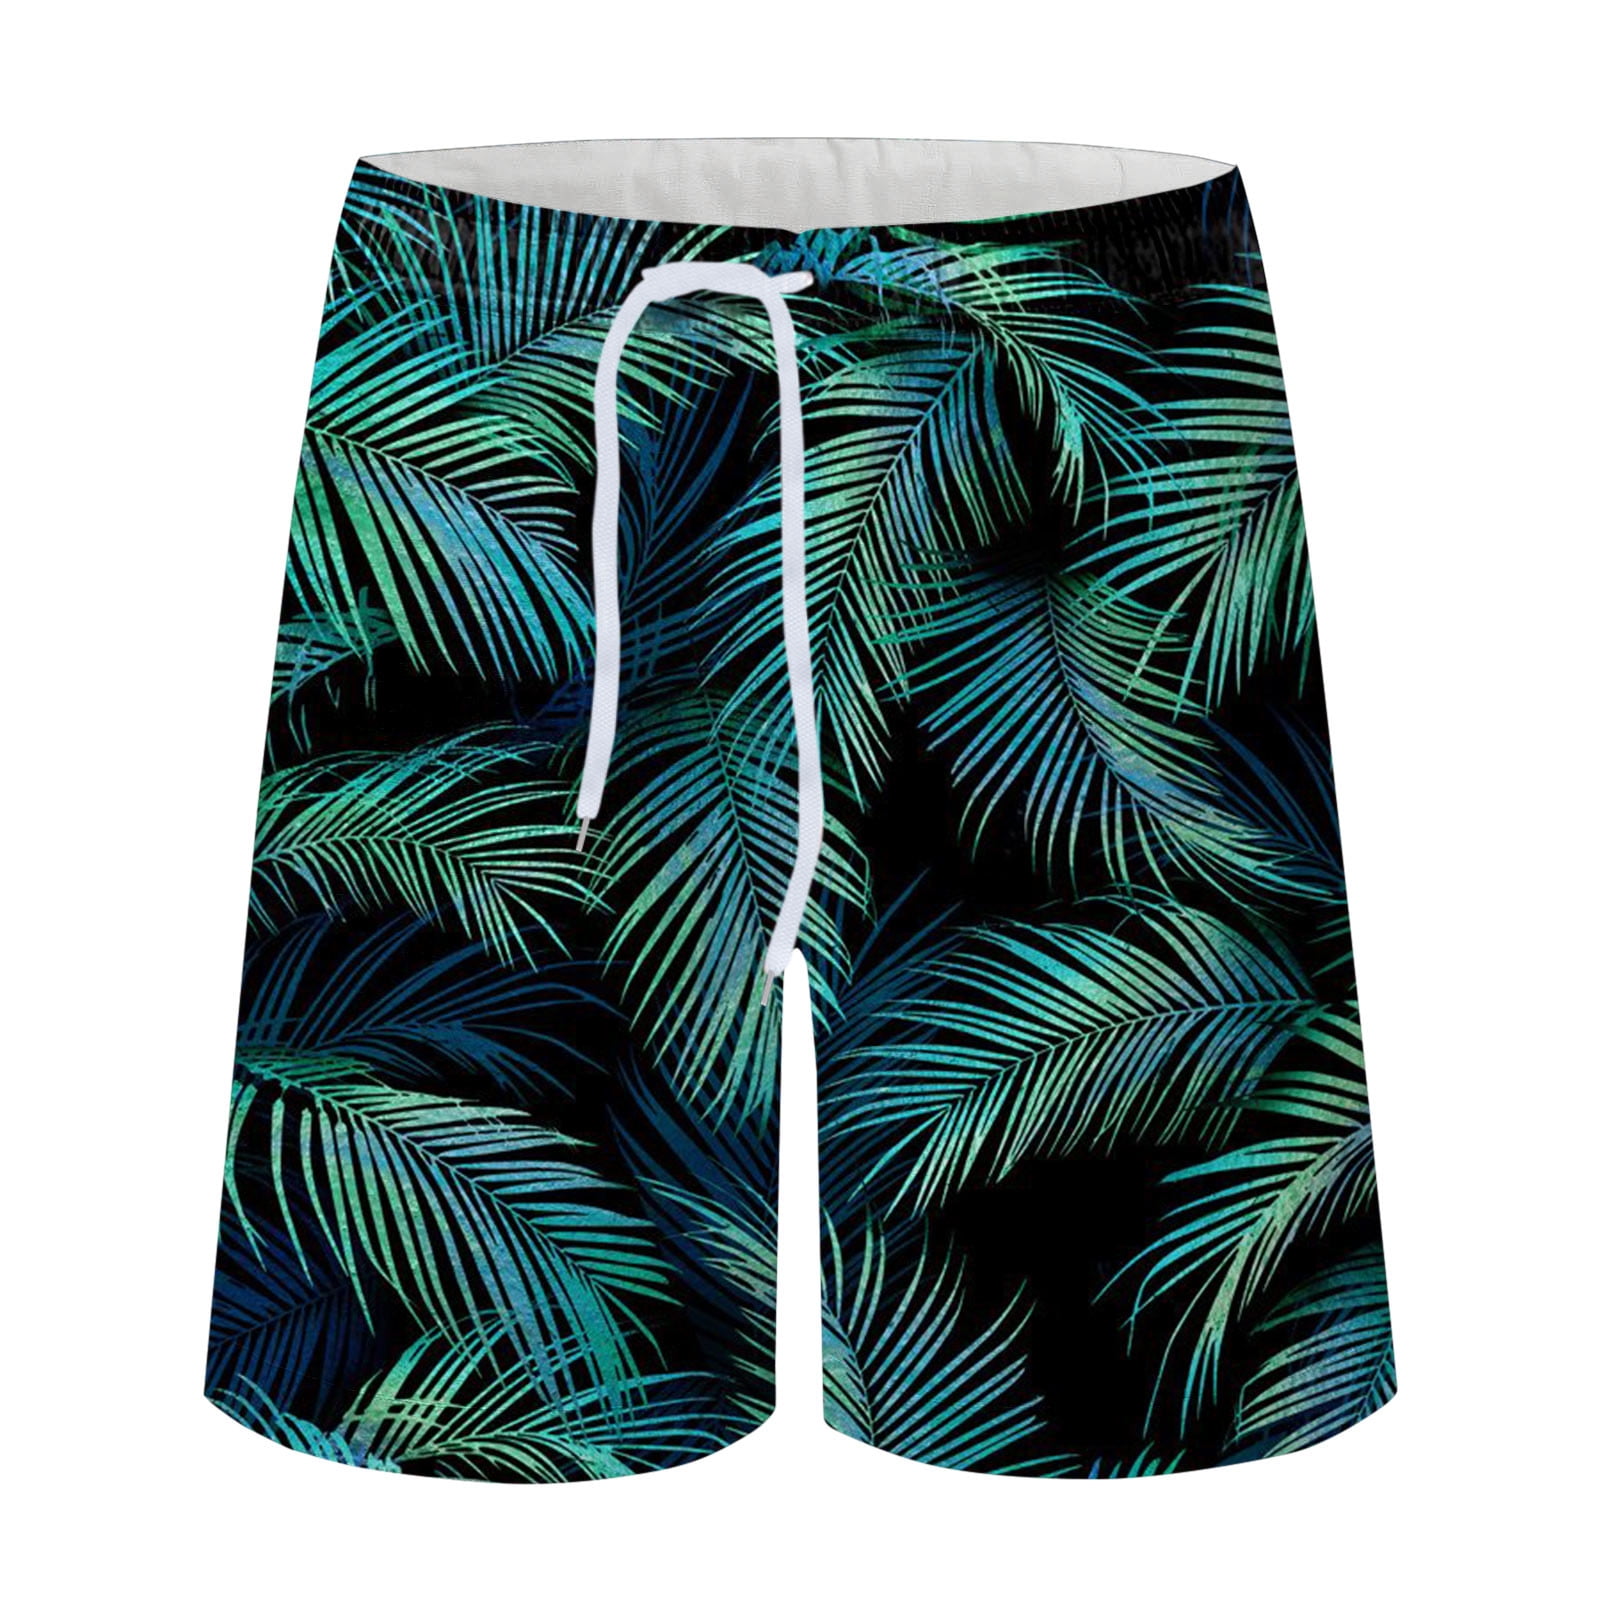 Hvyesh Men Swim Trunks Quick Dry Board Shorts Trendy Tropical Print ...